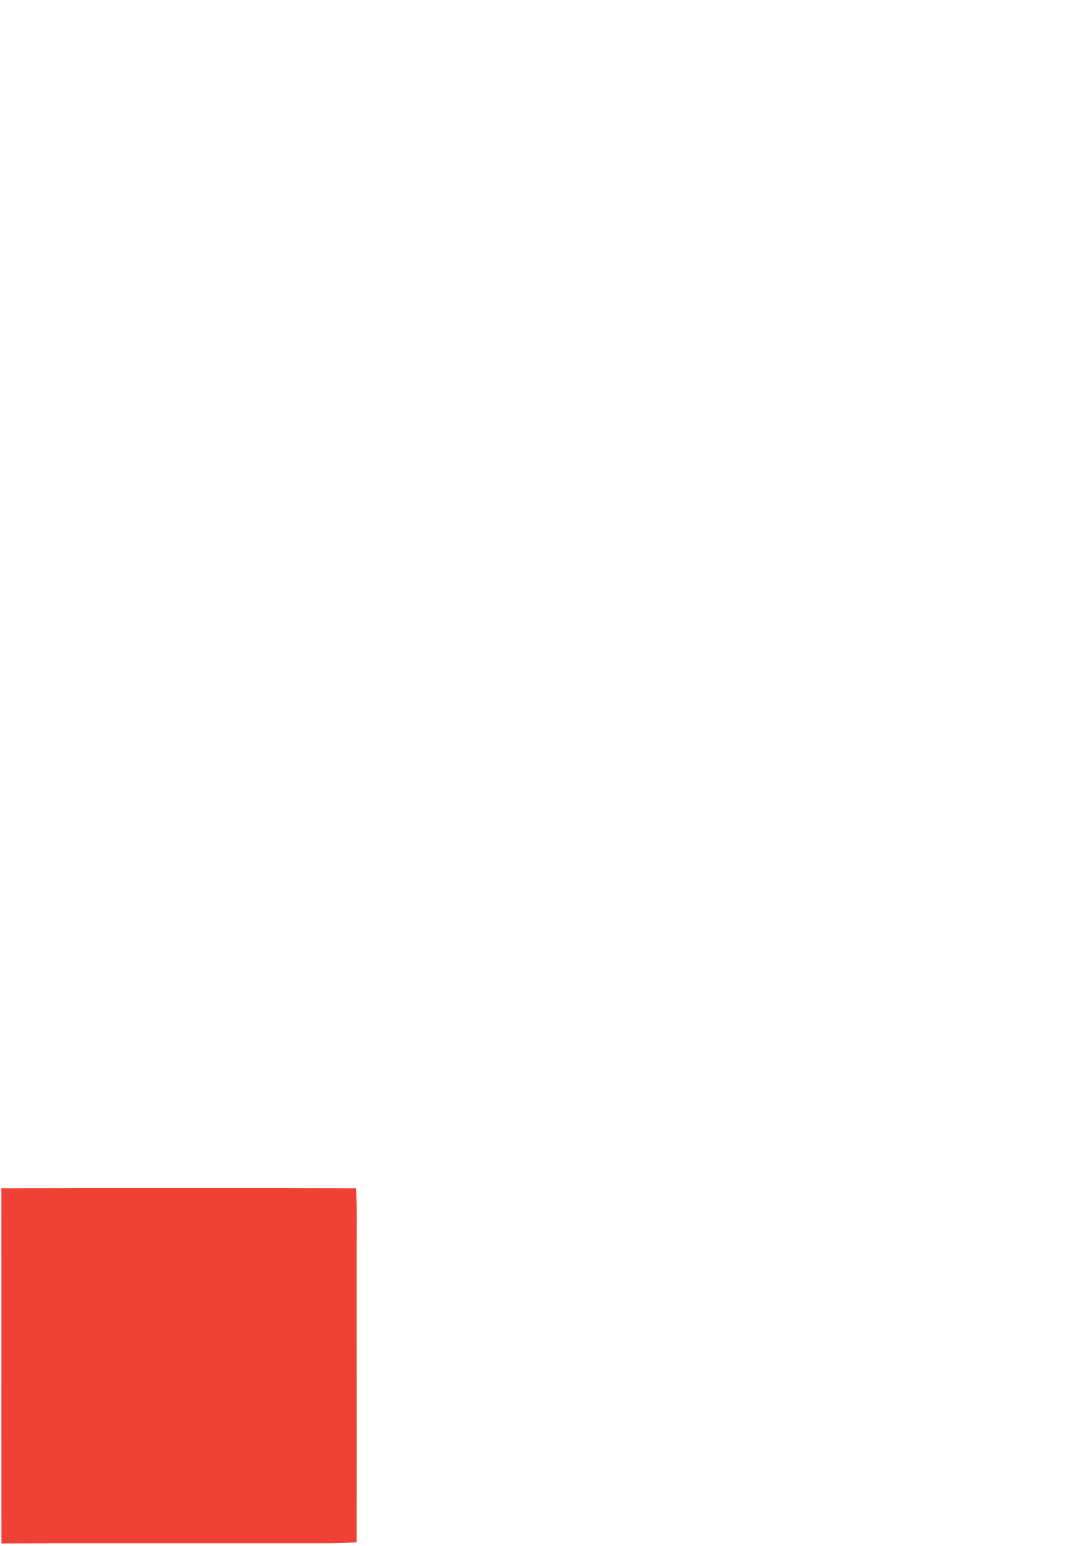 Delhivery logo for dark backgrounds (transparent PNG)